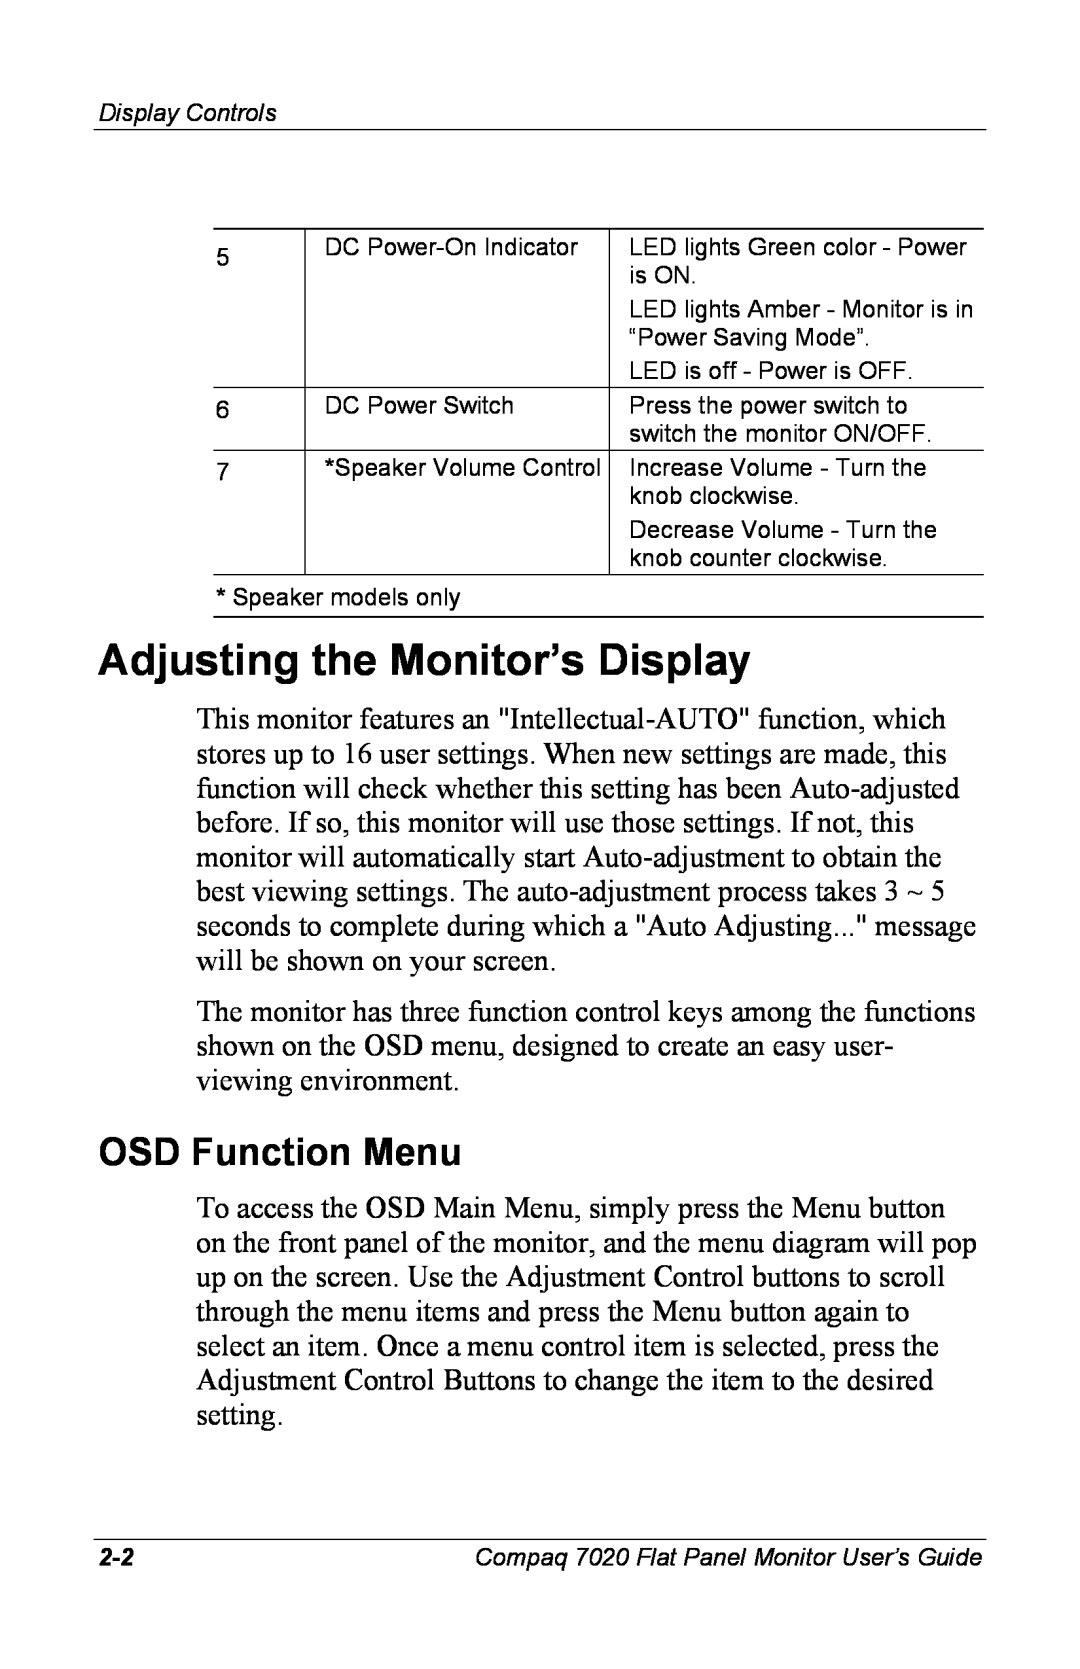 Compaq 7020 manual Adjusting the Monitor’s Display, OSD Function Menu 